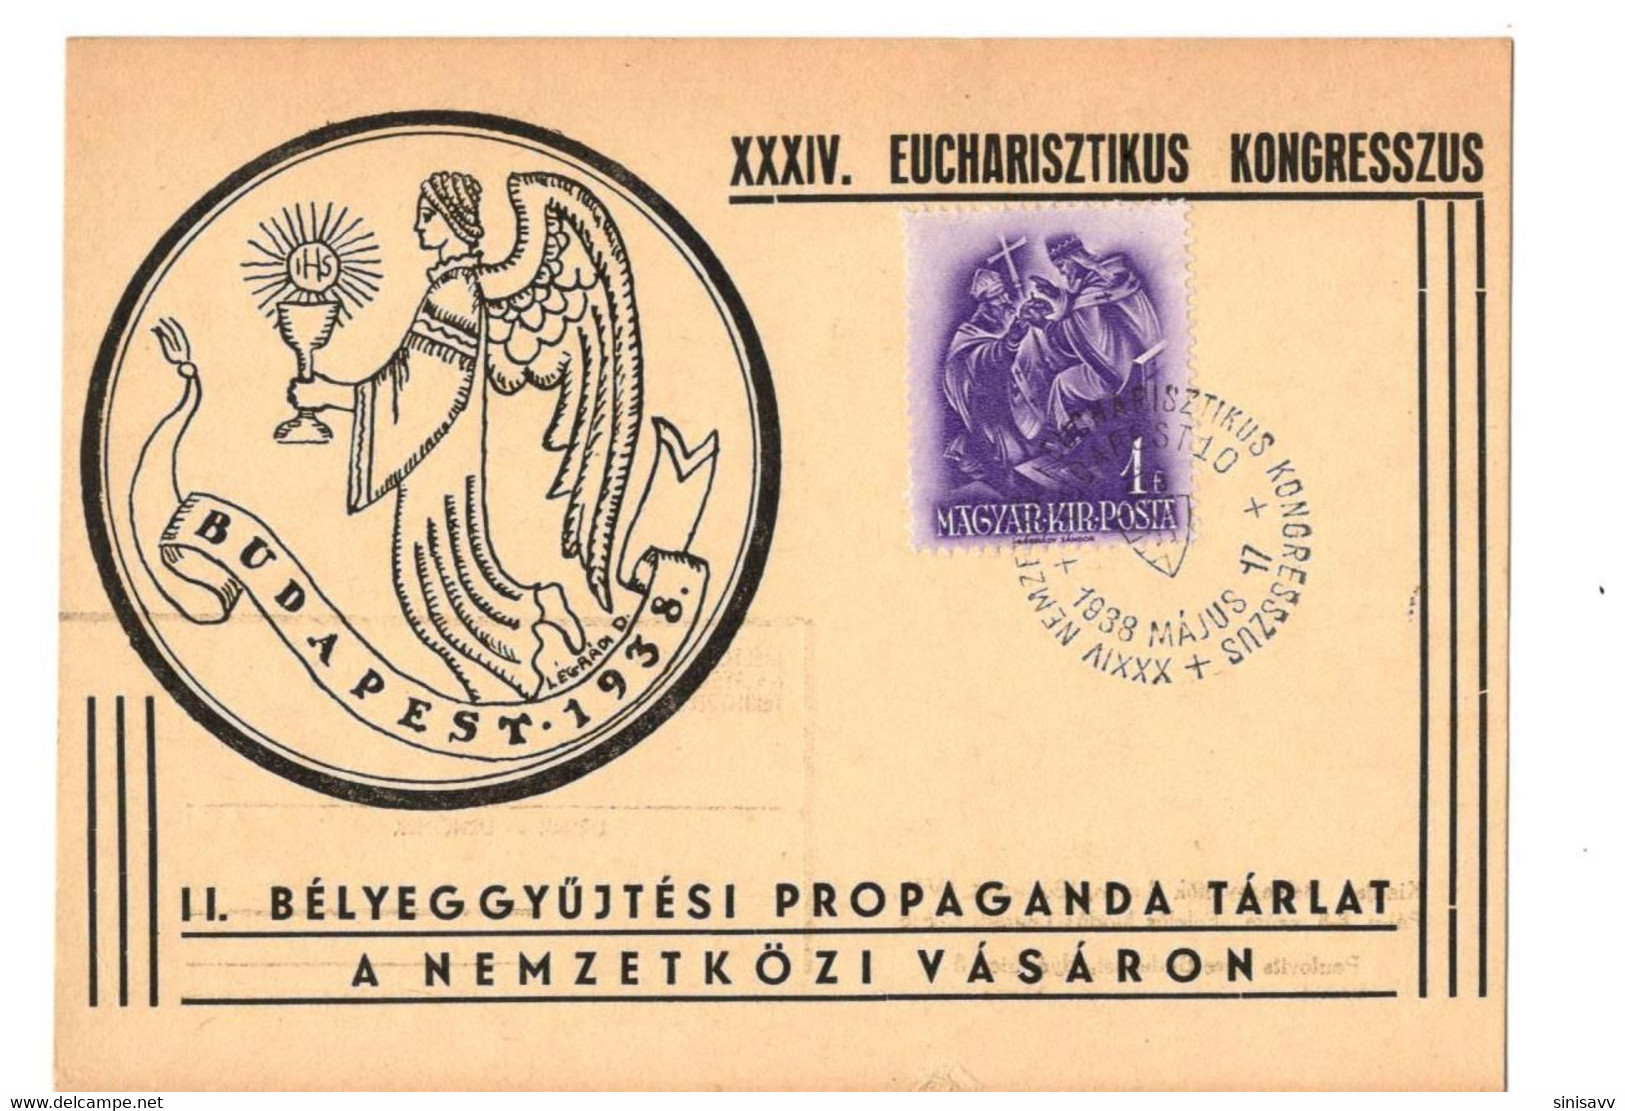 HUNGARY - XXXIV. EUCHARISZTIKUS KONGRESSZUS 1938 - Herdenkingsblaadjes